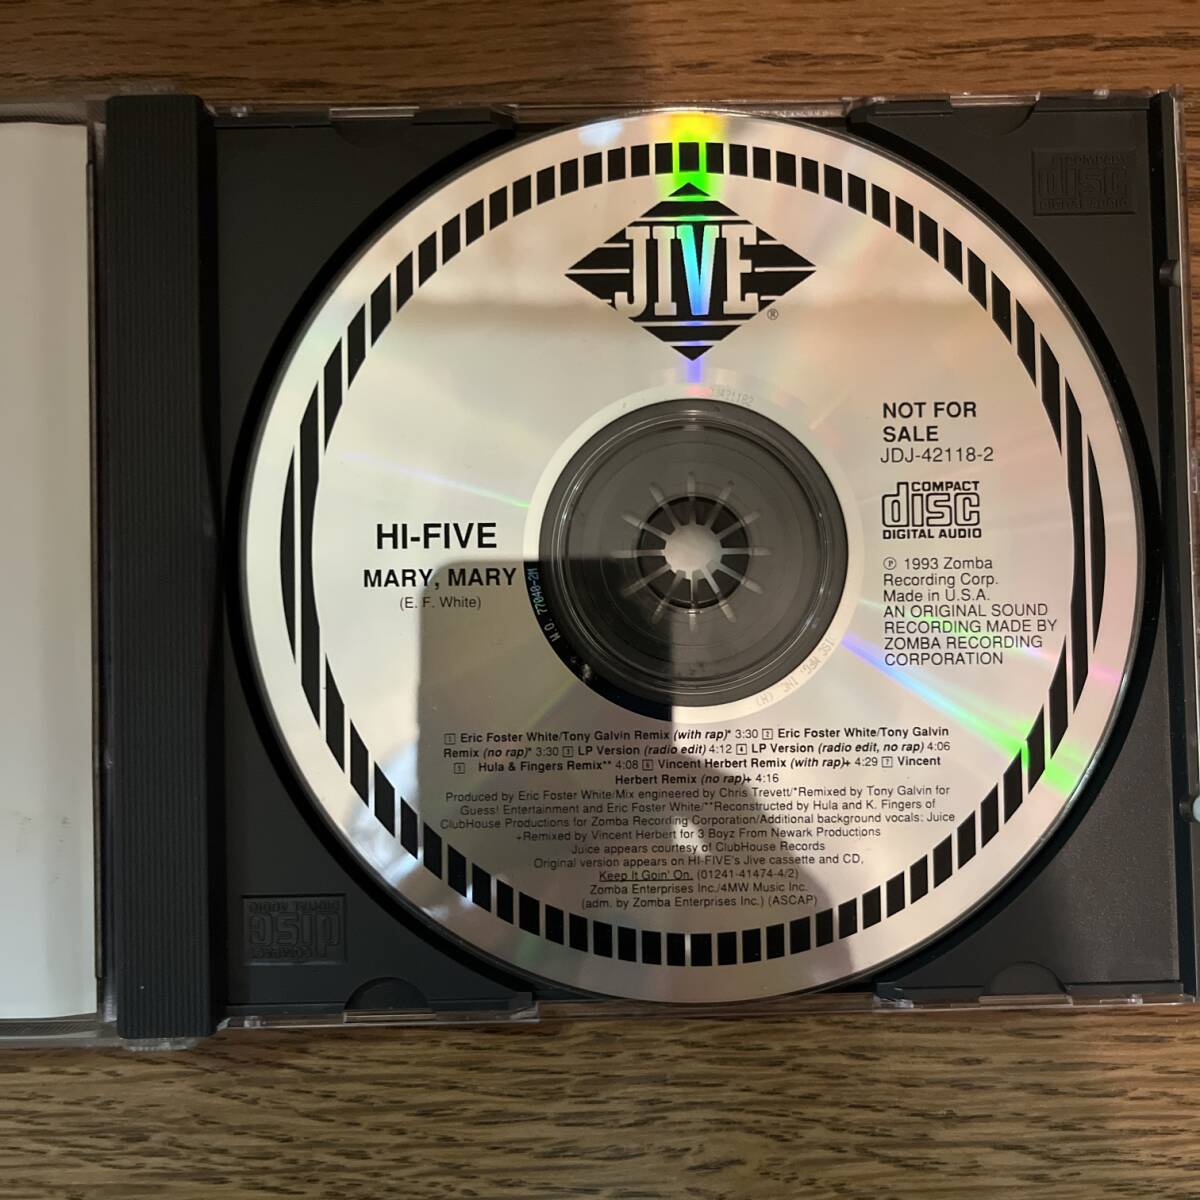 US盤 プロモ CD Hi-Five Mary Mary JDJ-42118-2の画像4